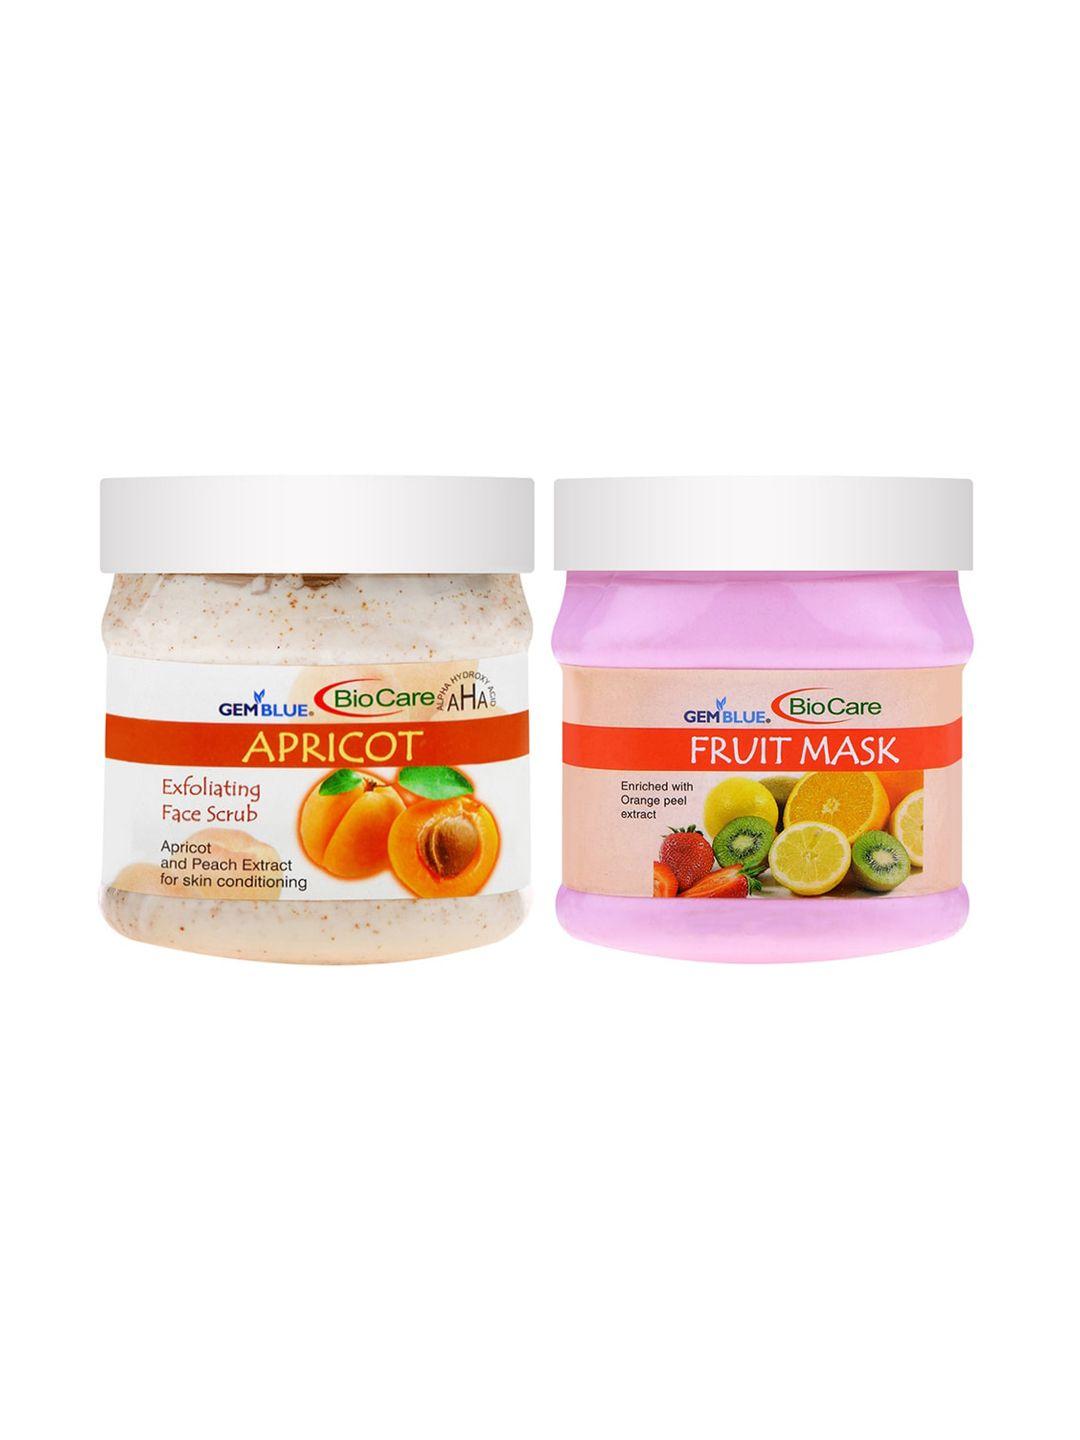 gemblue biocare unisex apricot scrub & gemblue fruit mask 500ml each